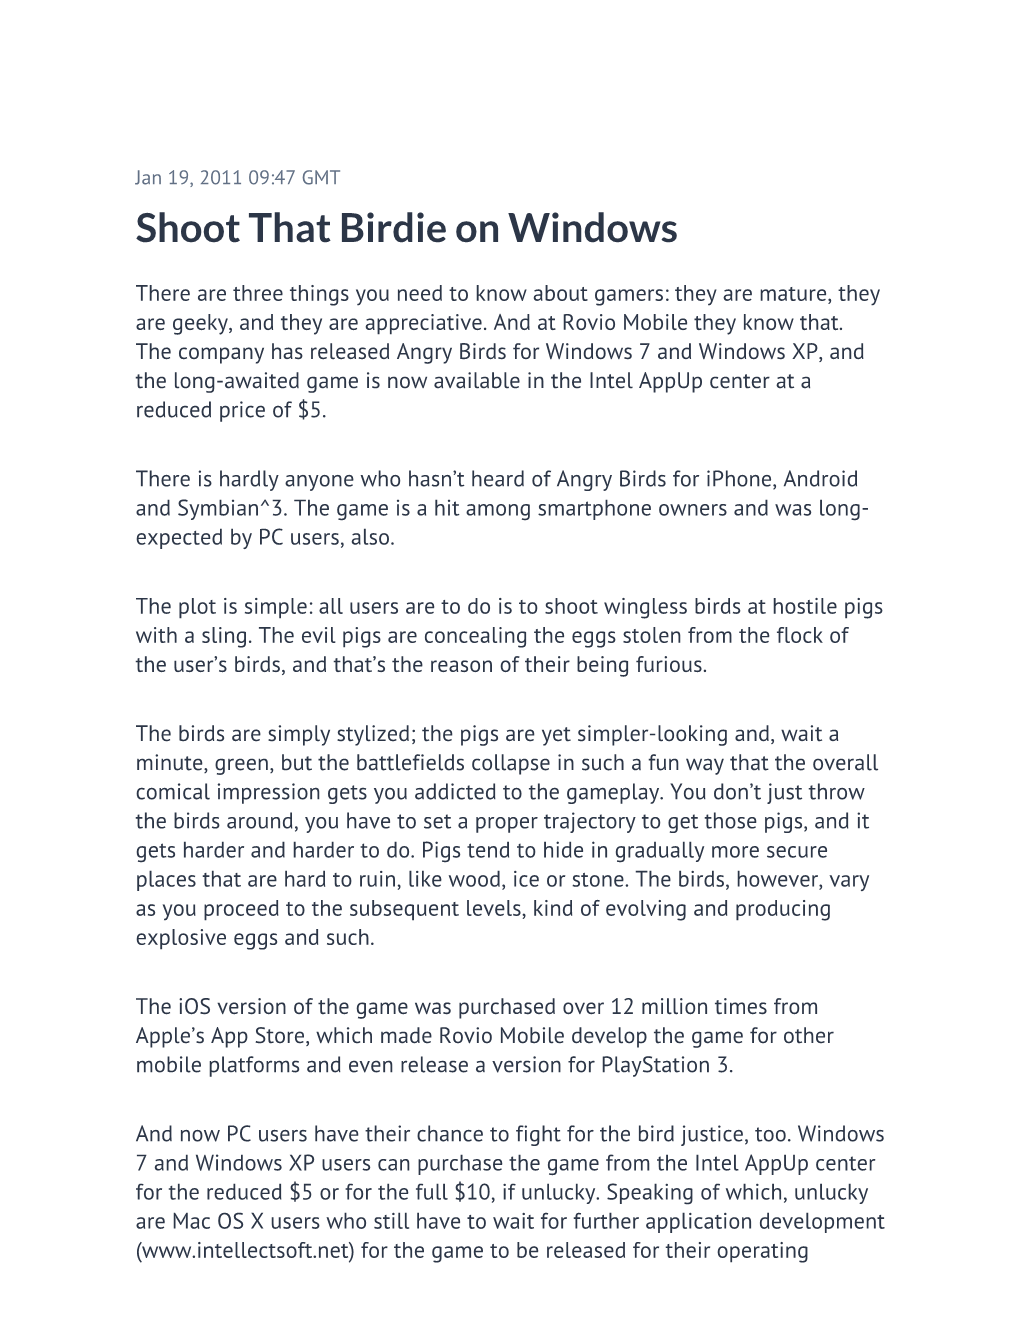 Shoot That Birdie on Windows